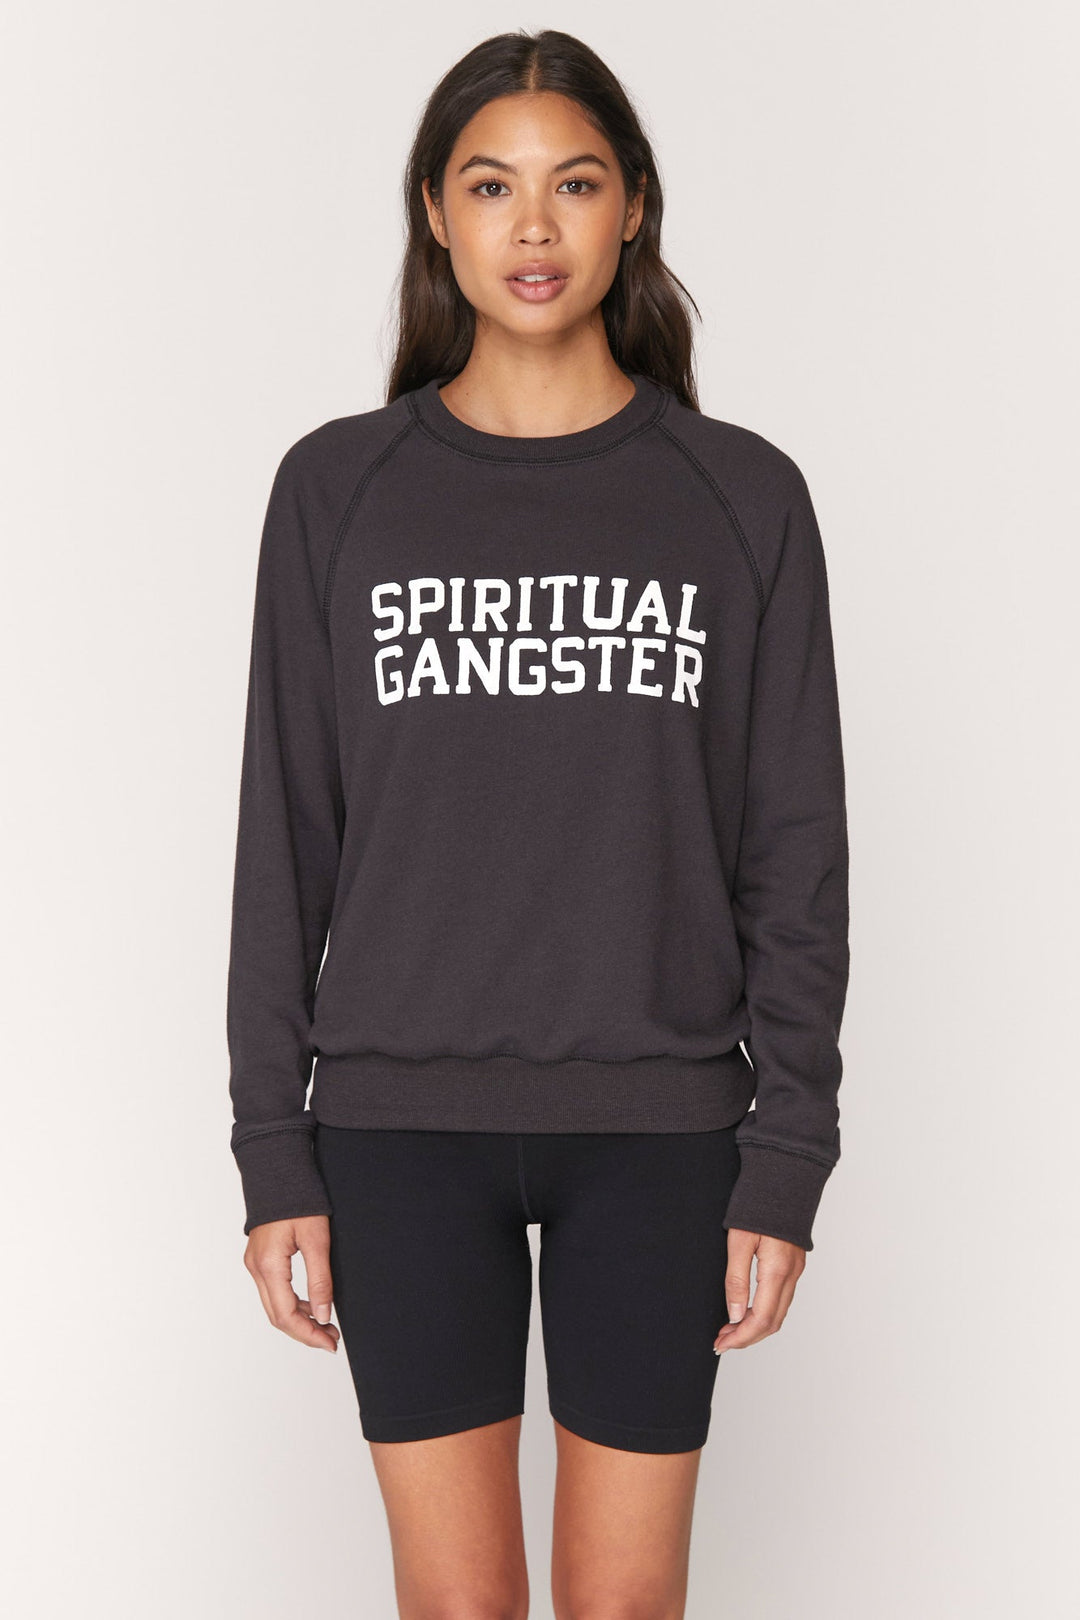 Spiritual Gangster Sweatshirt - Vintage Black - Sun Diego Boardshop